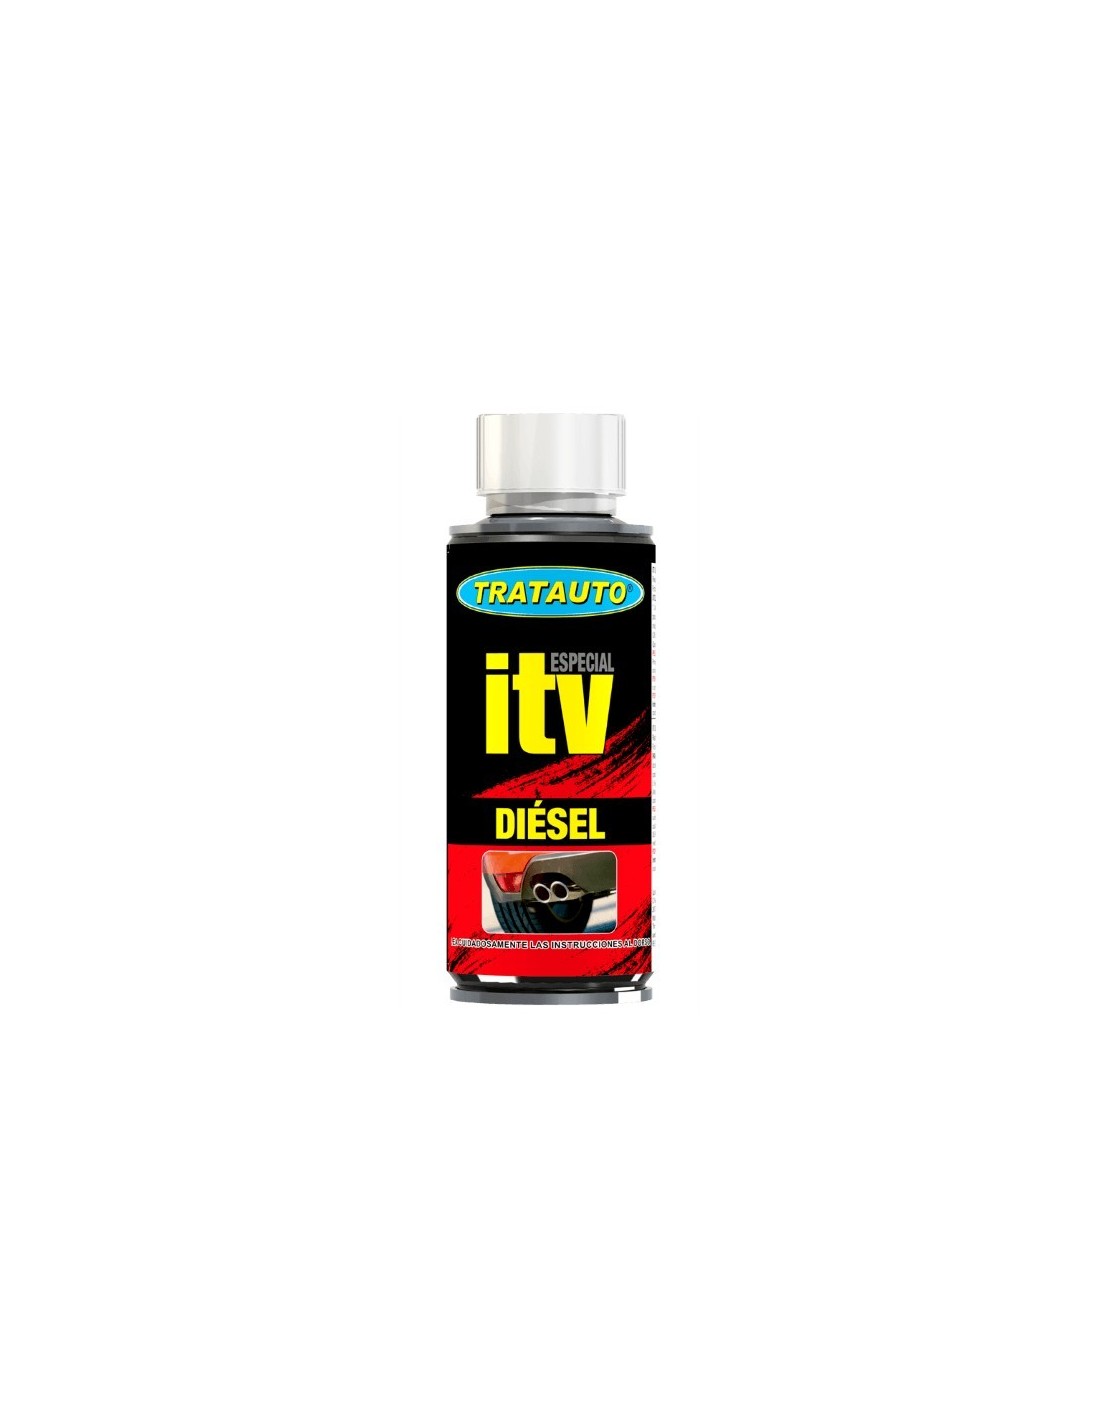 ITV Diésel, Tratauto150 ml- 6,78 € -  Capacidad 150 ml